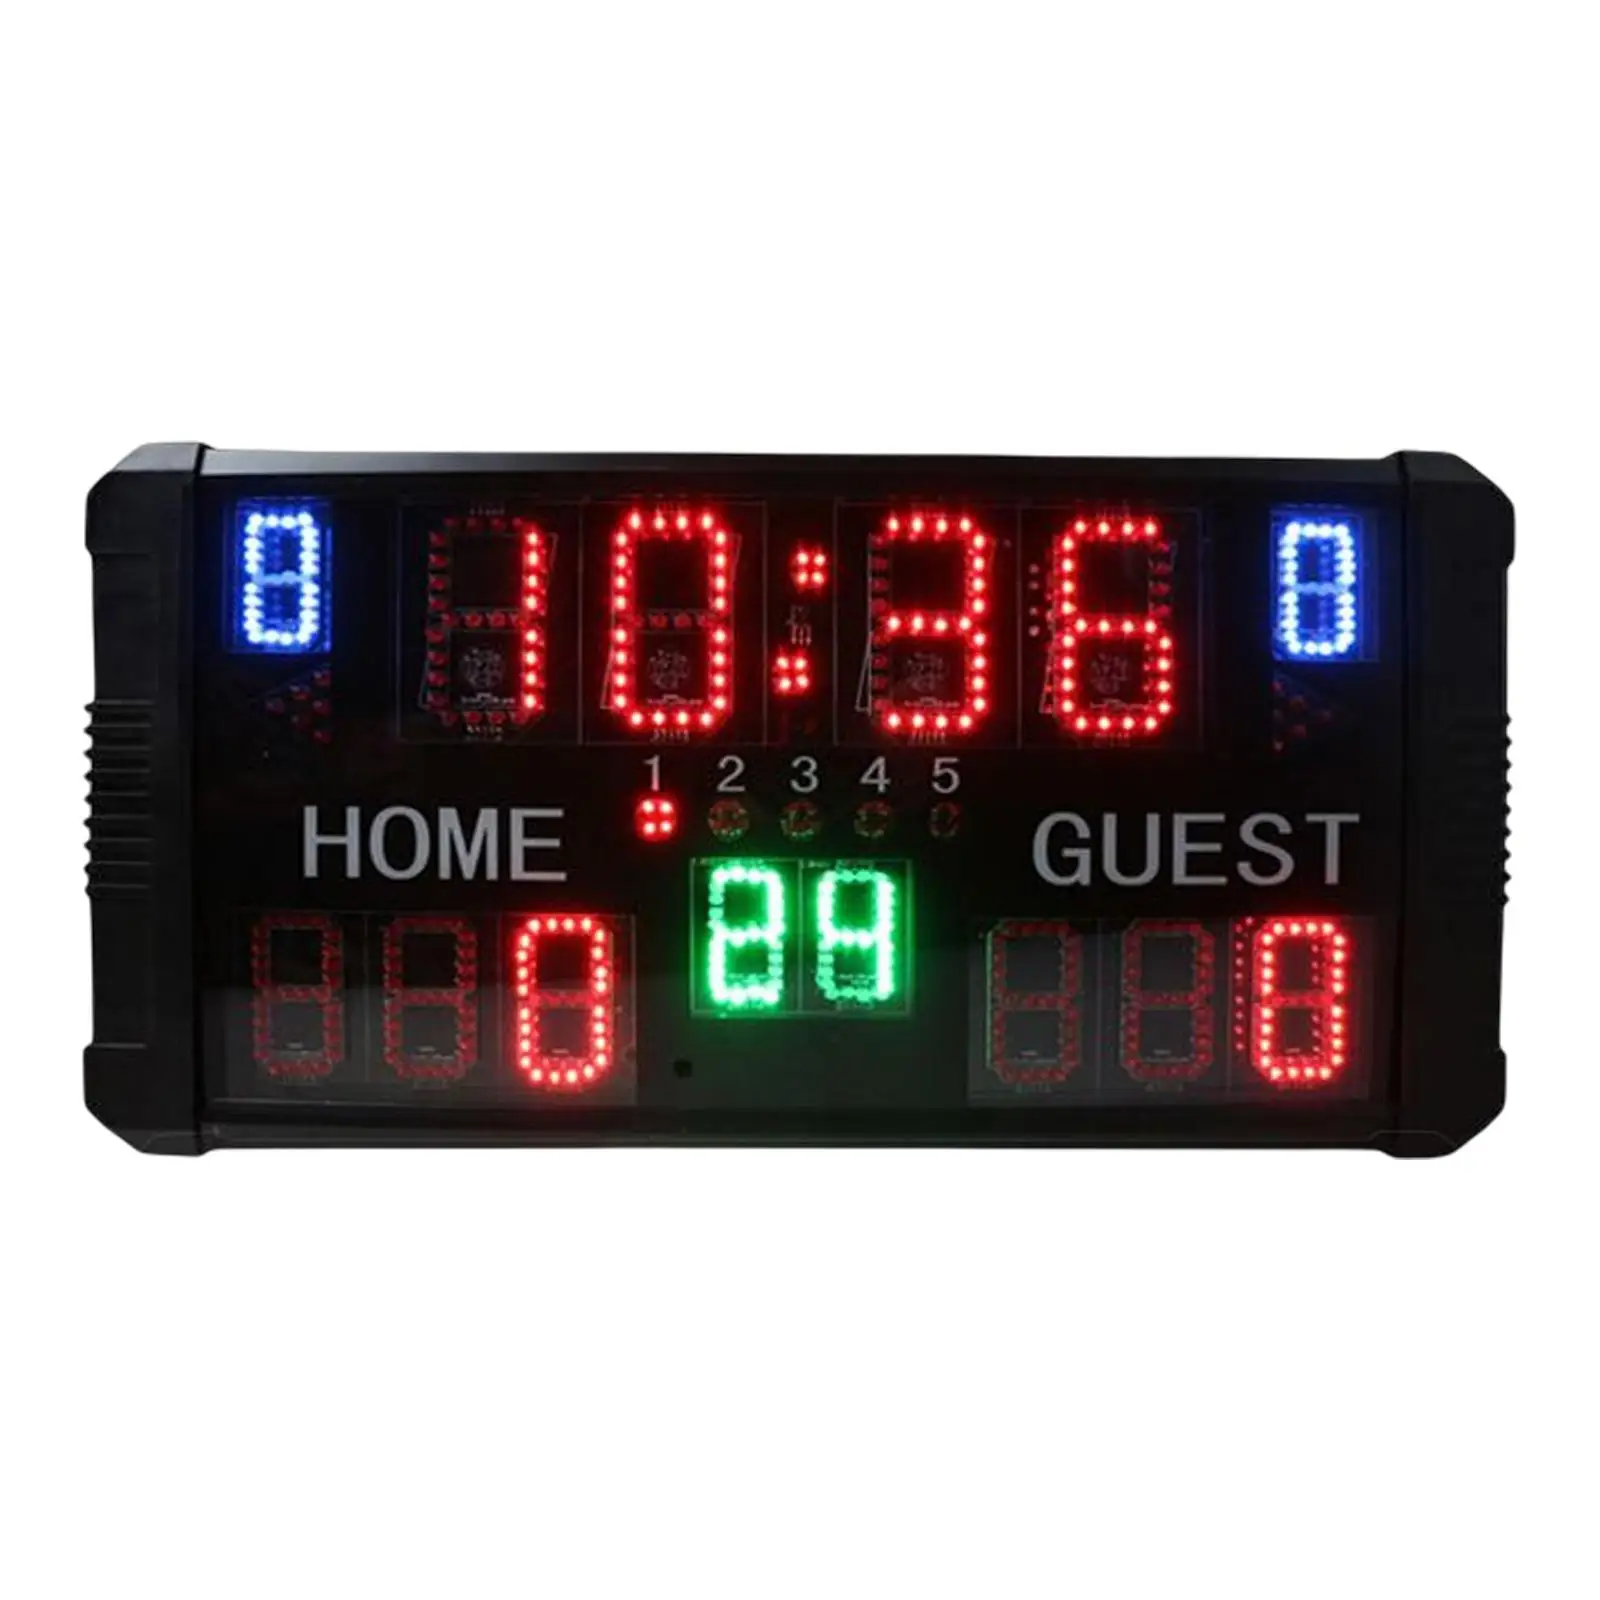 Multifunctional Electronic Digital Scoreboard with Remote Indoor Basketball Scoreboard Score Keeper for Wrestling Tennis Boxing